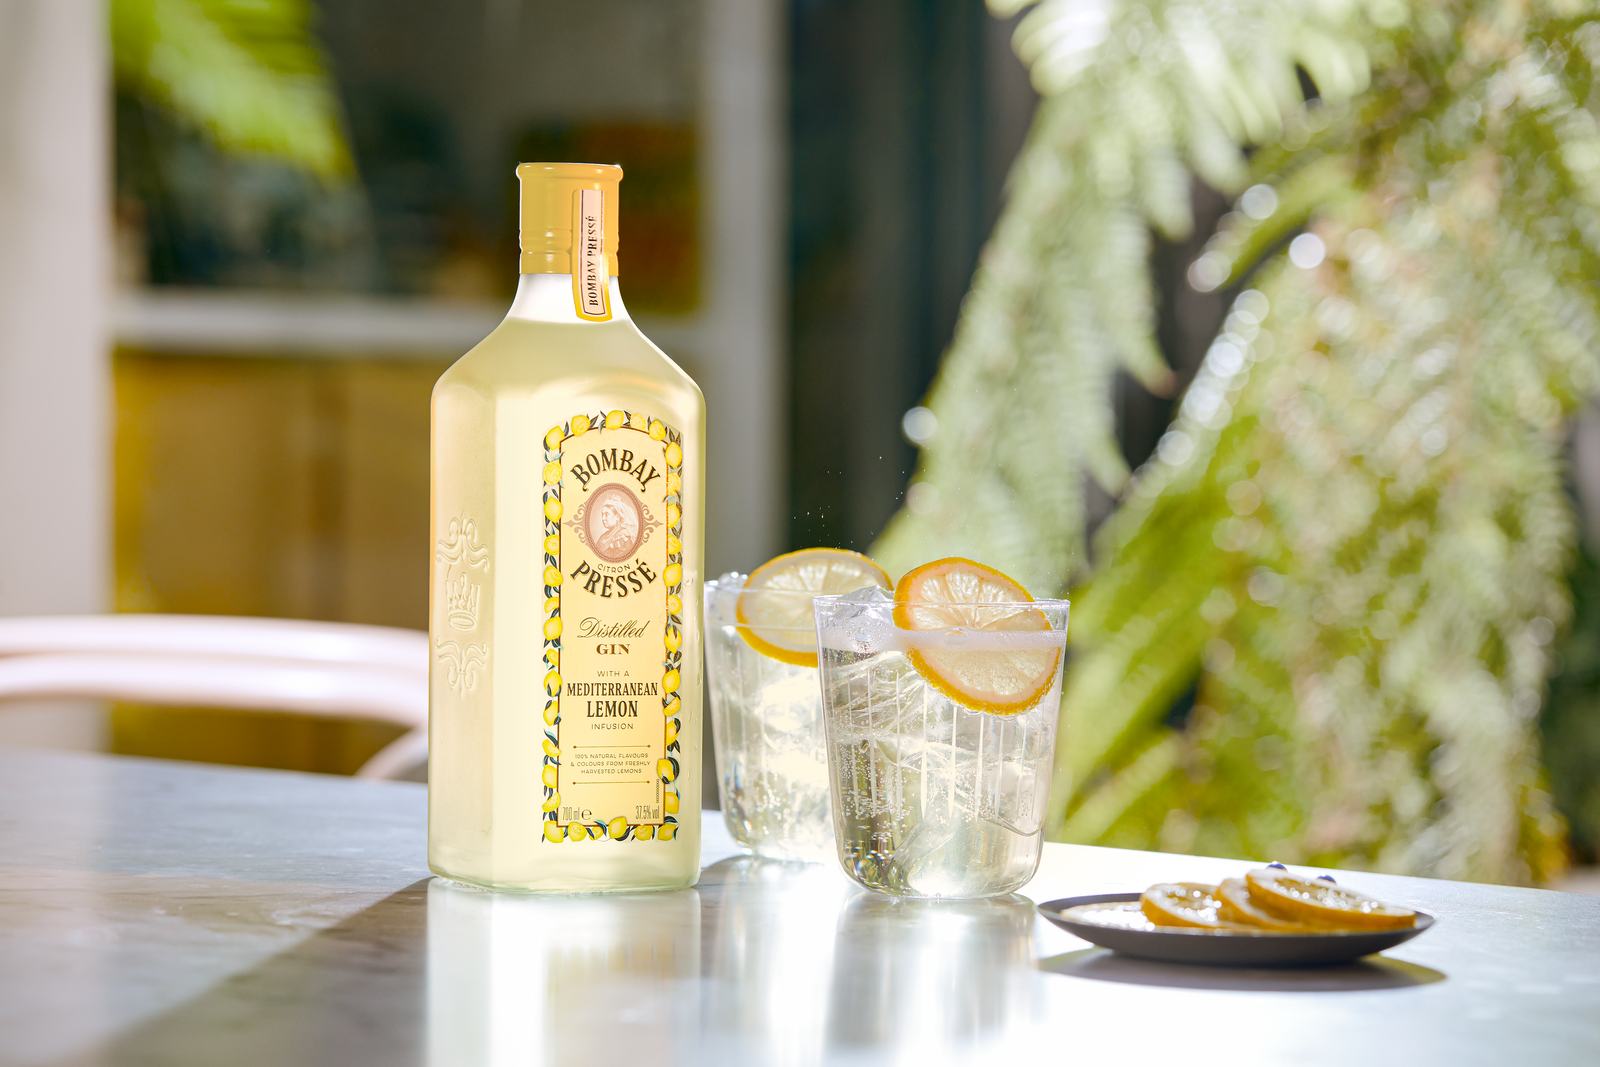 Bombay Sapphire gin introduces Citron Pressé